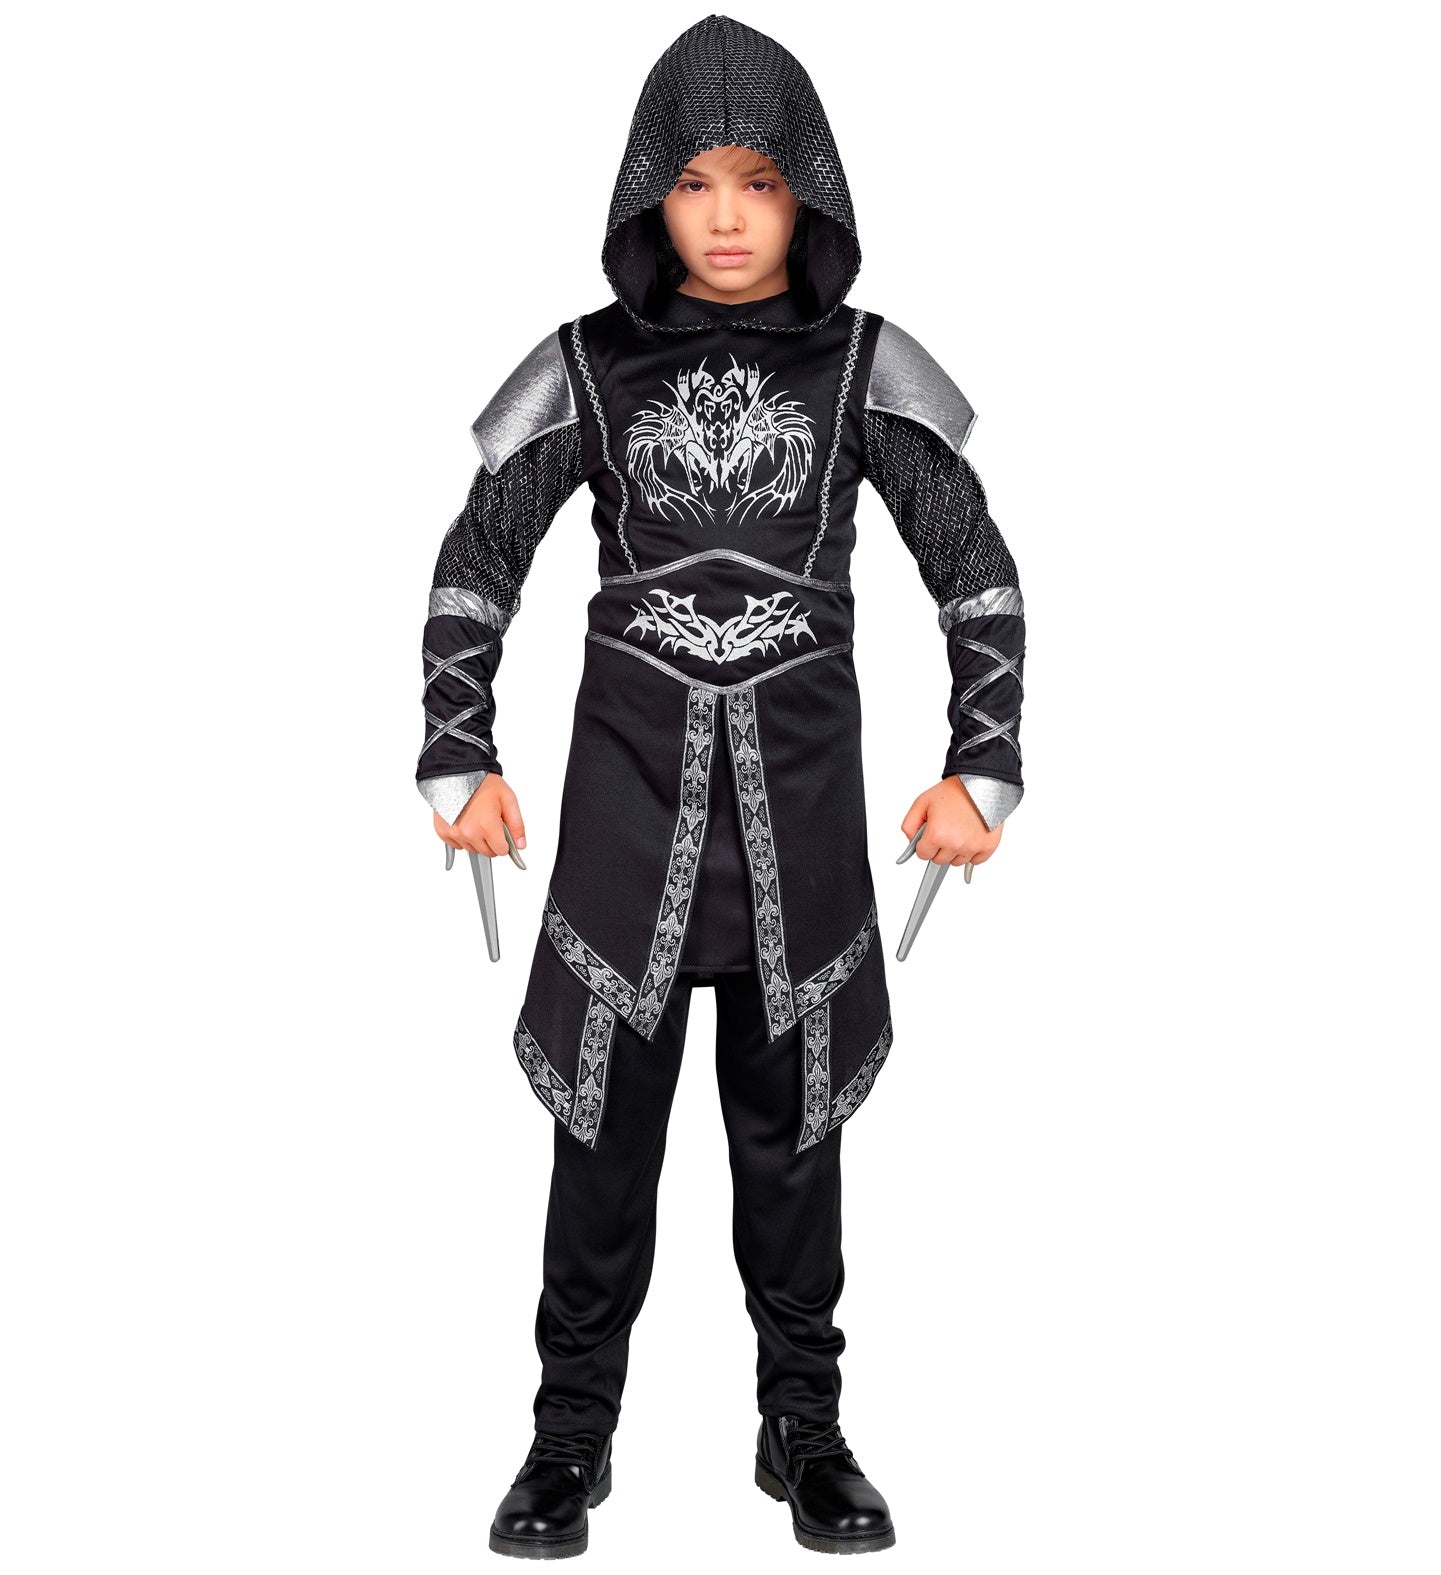 Kids blue cyber ninja costume. The coolest